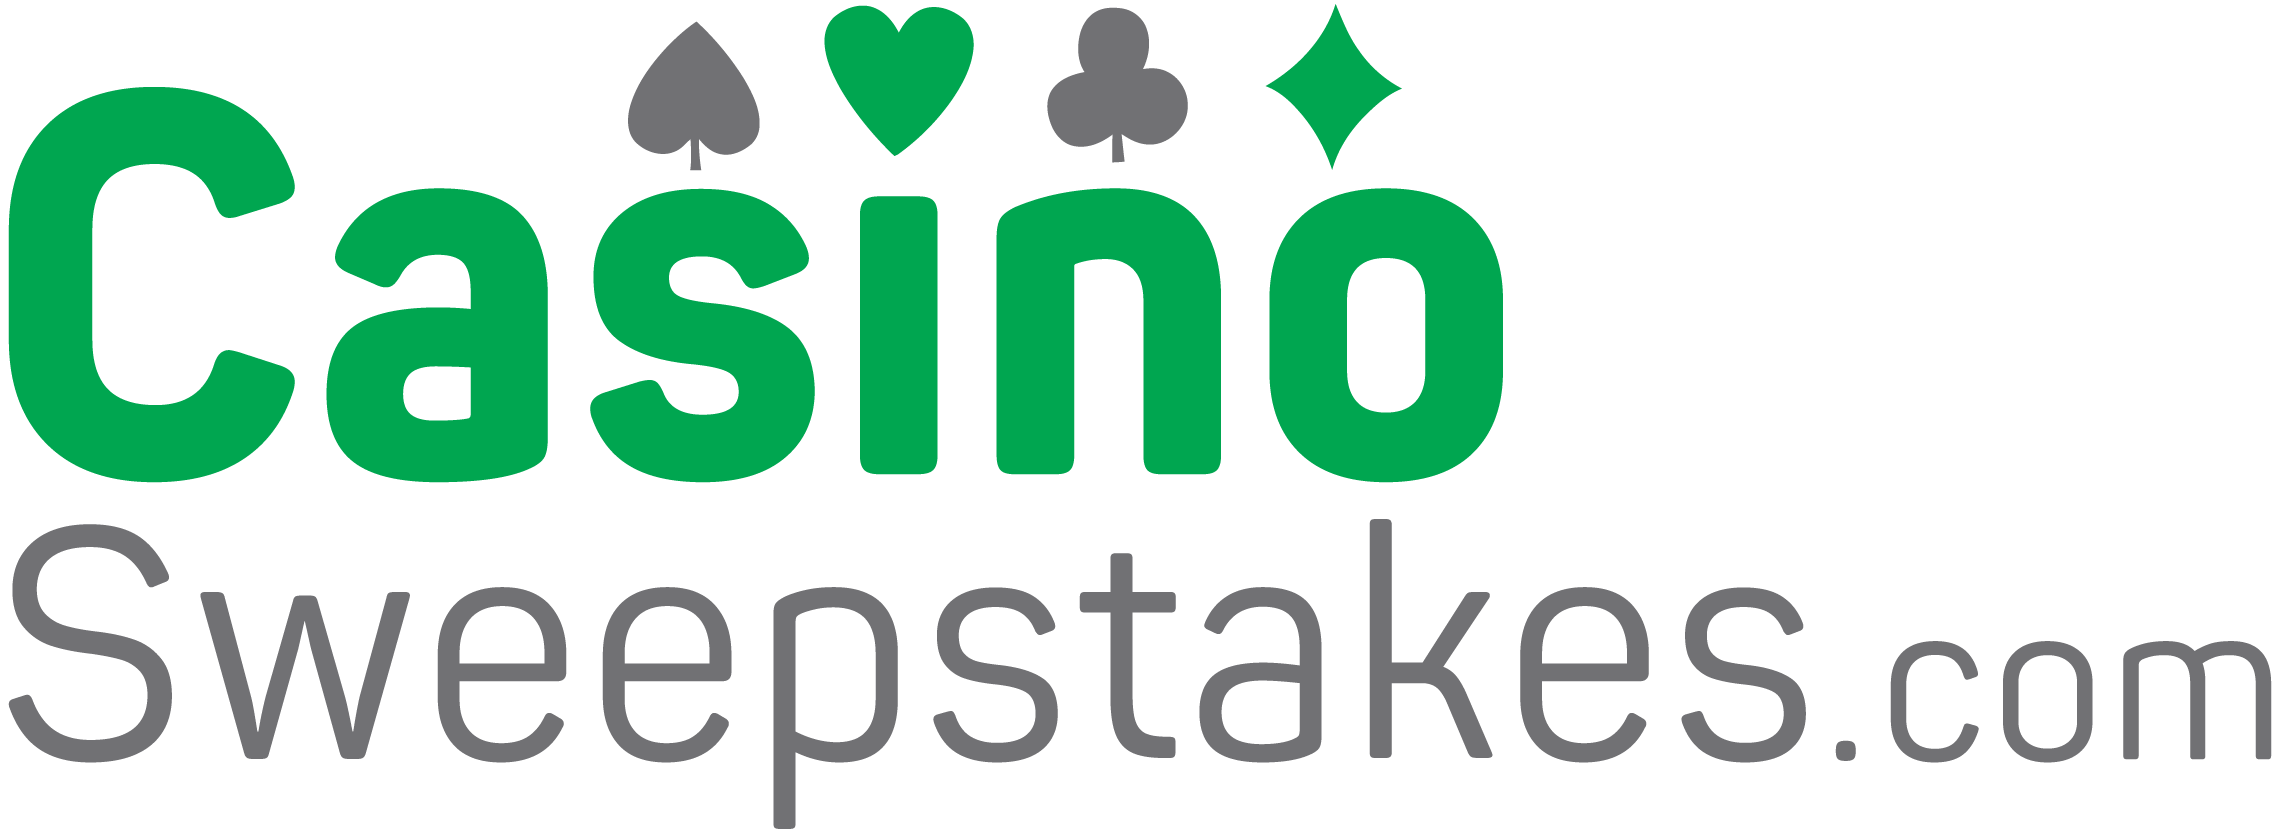 Casino Sweepstakes